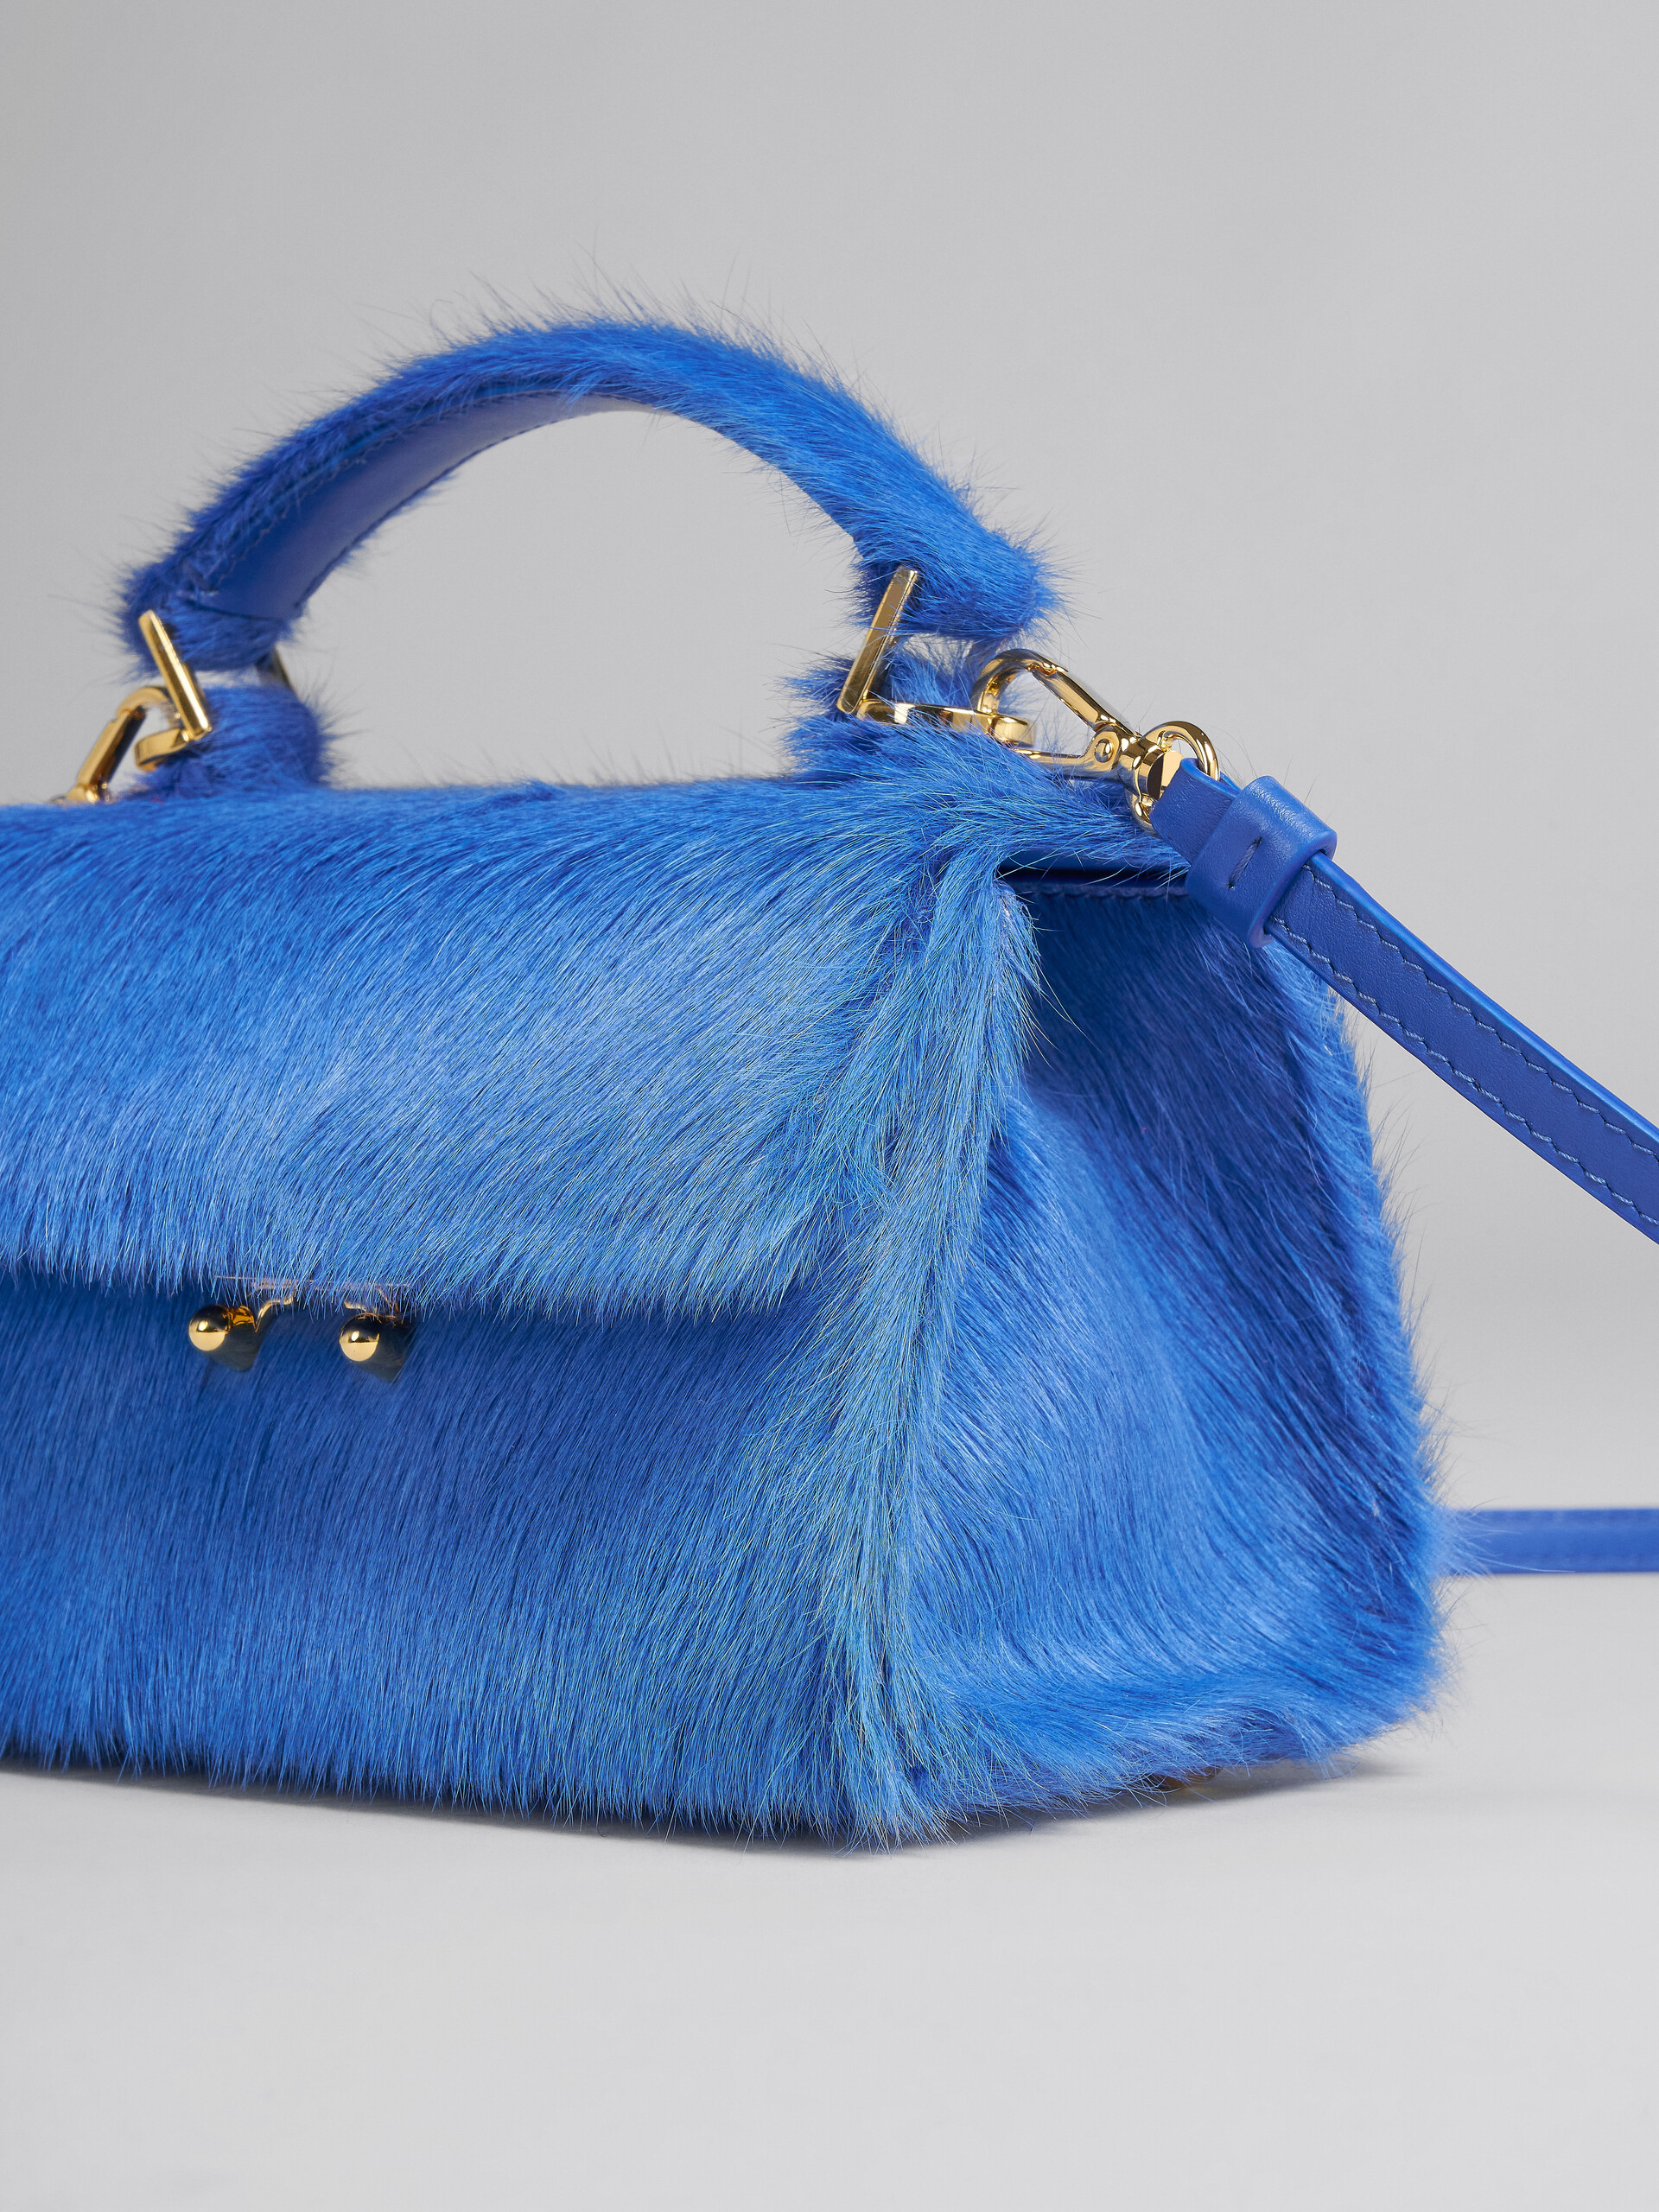 Relativity Mini Bag in blue long hair calfskin - Handbag - Image 5